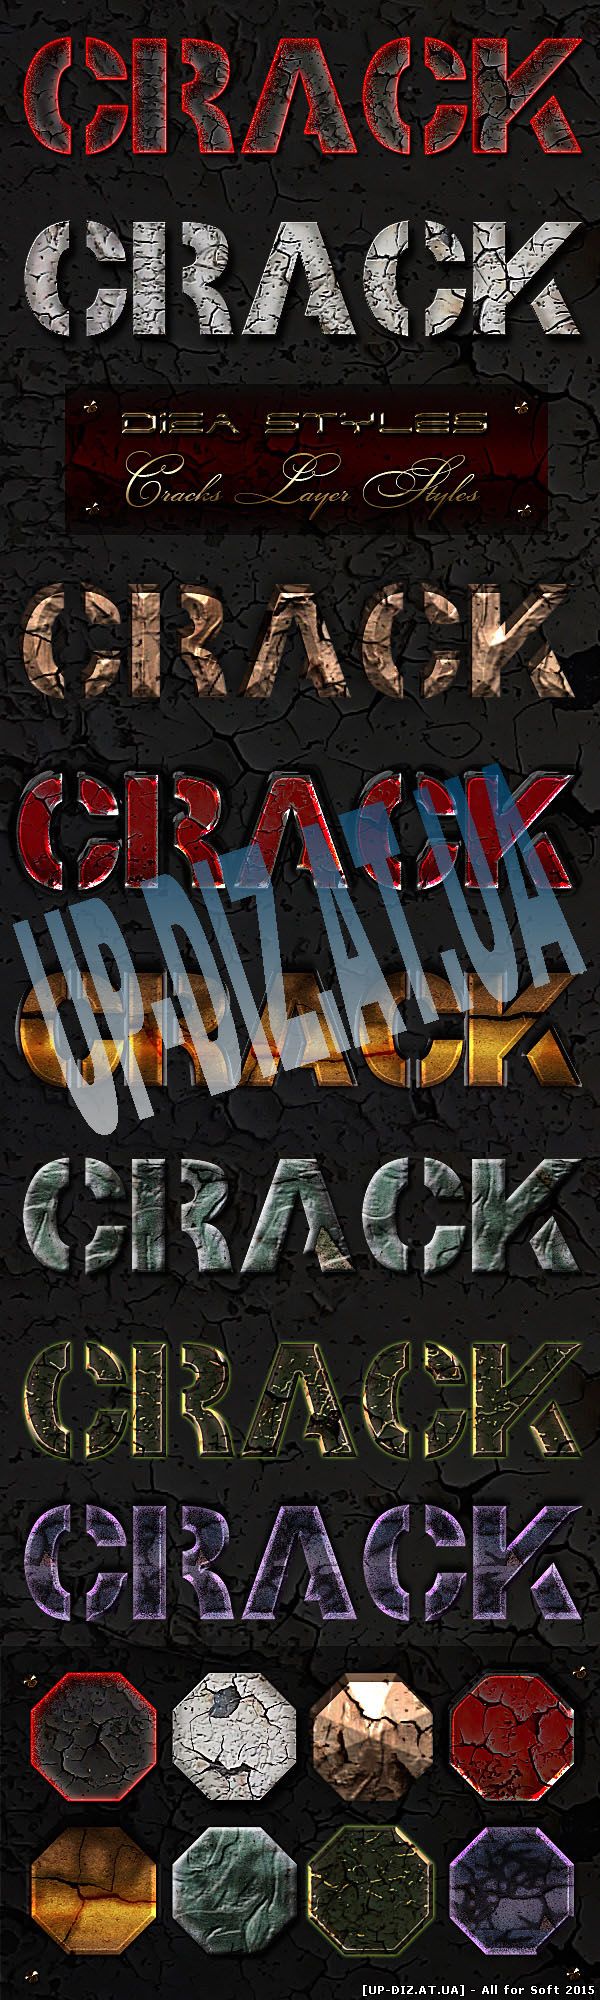 Трещины (Crack) By XuLiGaNkA